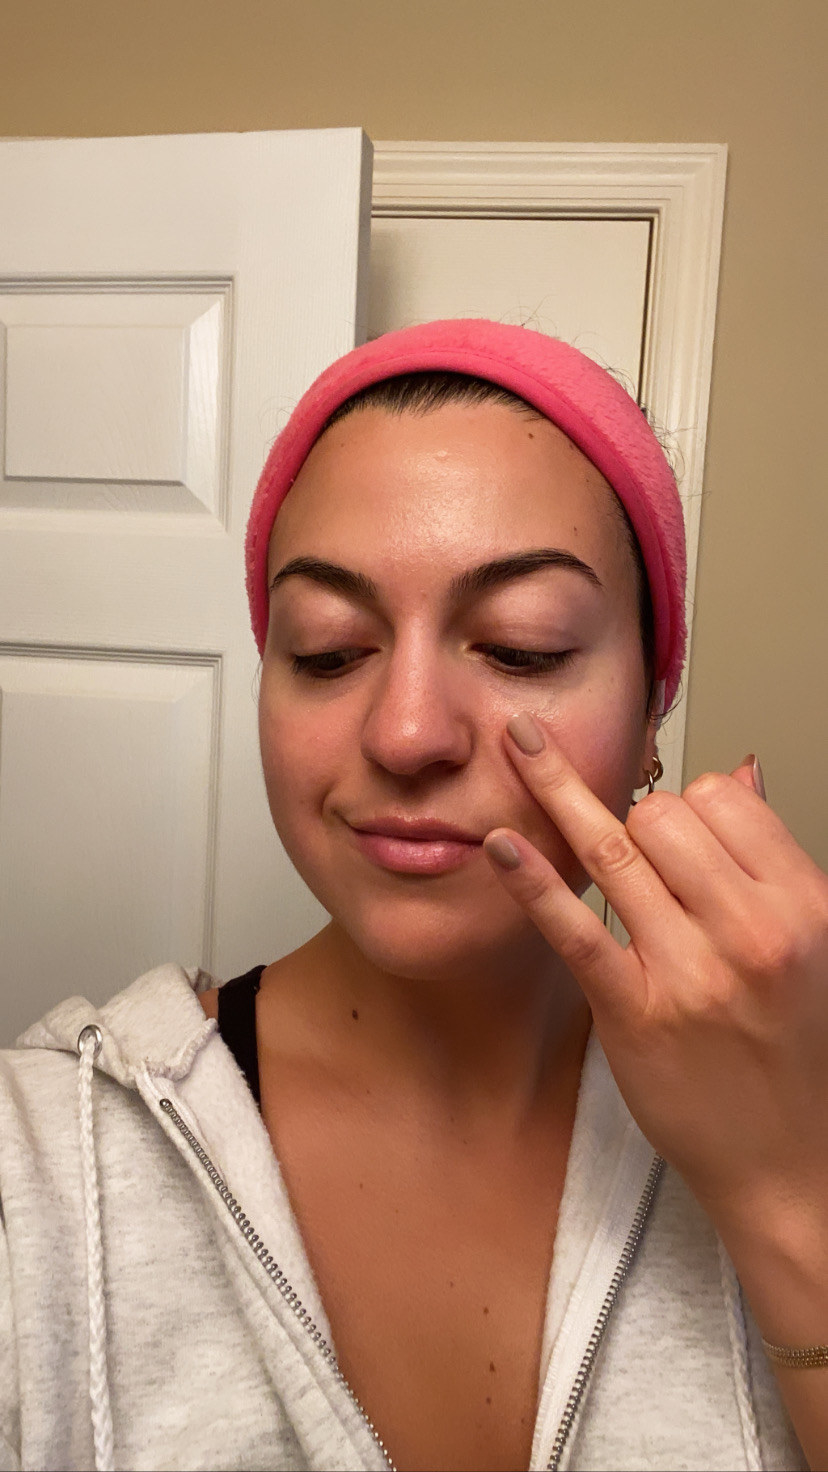 Me applying my beauty oil to my under eye area